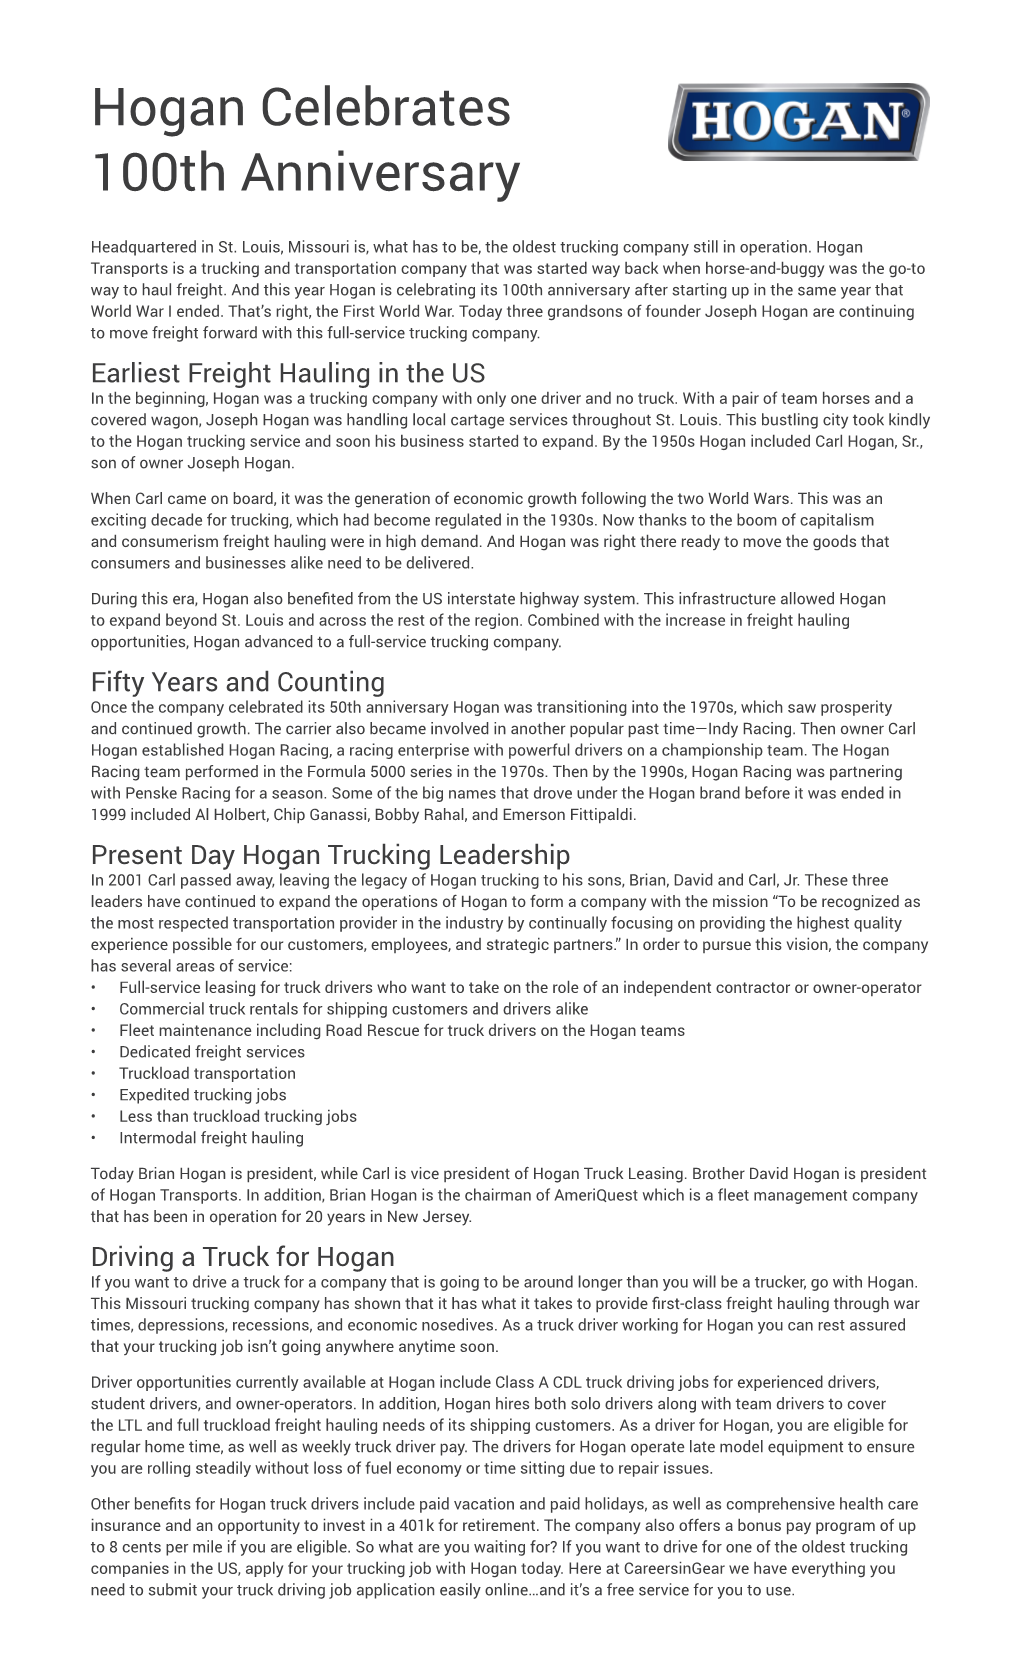 Hogan Trucking 100Th Anniversary